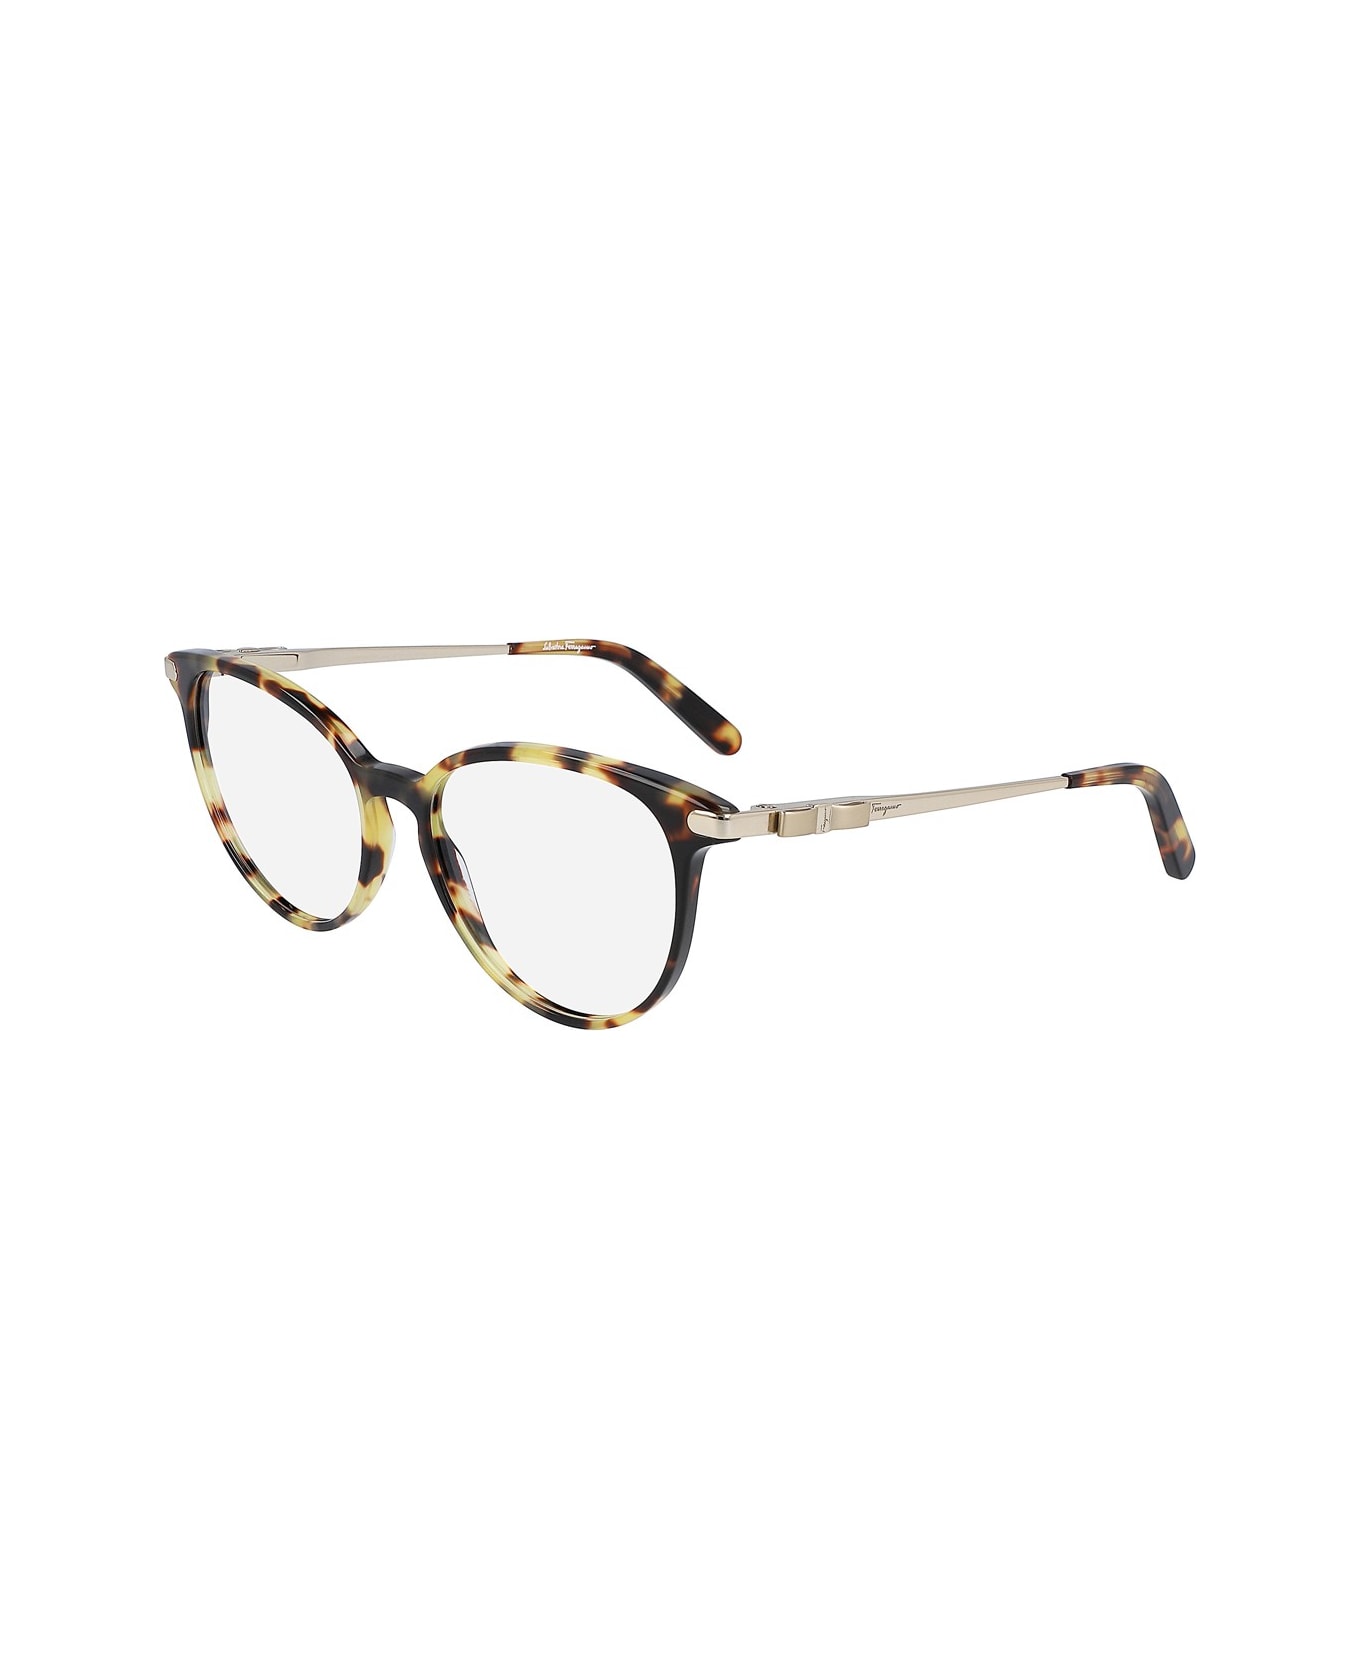 Salvatore Ferragamo Eyewear Sf2862 Glasses - Marrone アイウェア